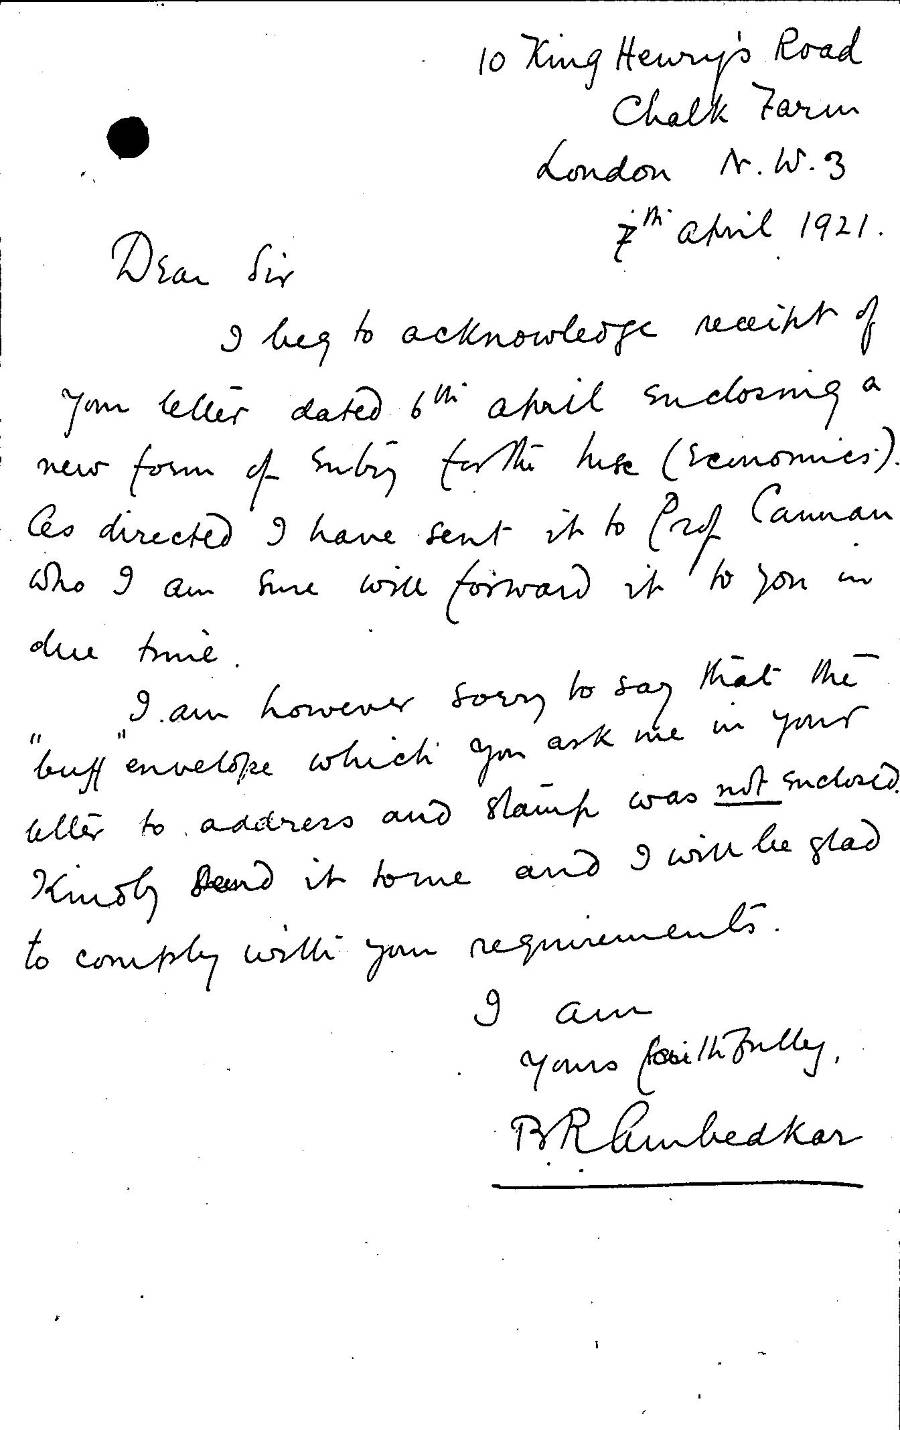 Ambedkar’s reply to school secretary, 1921